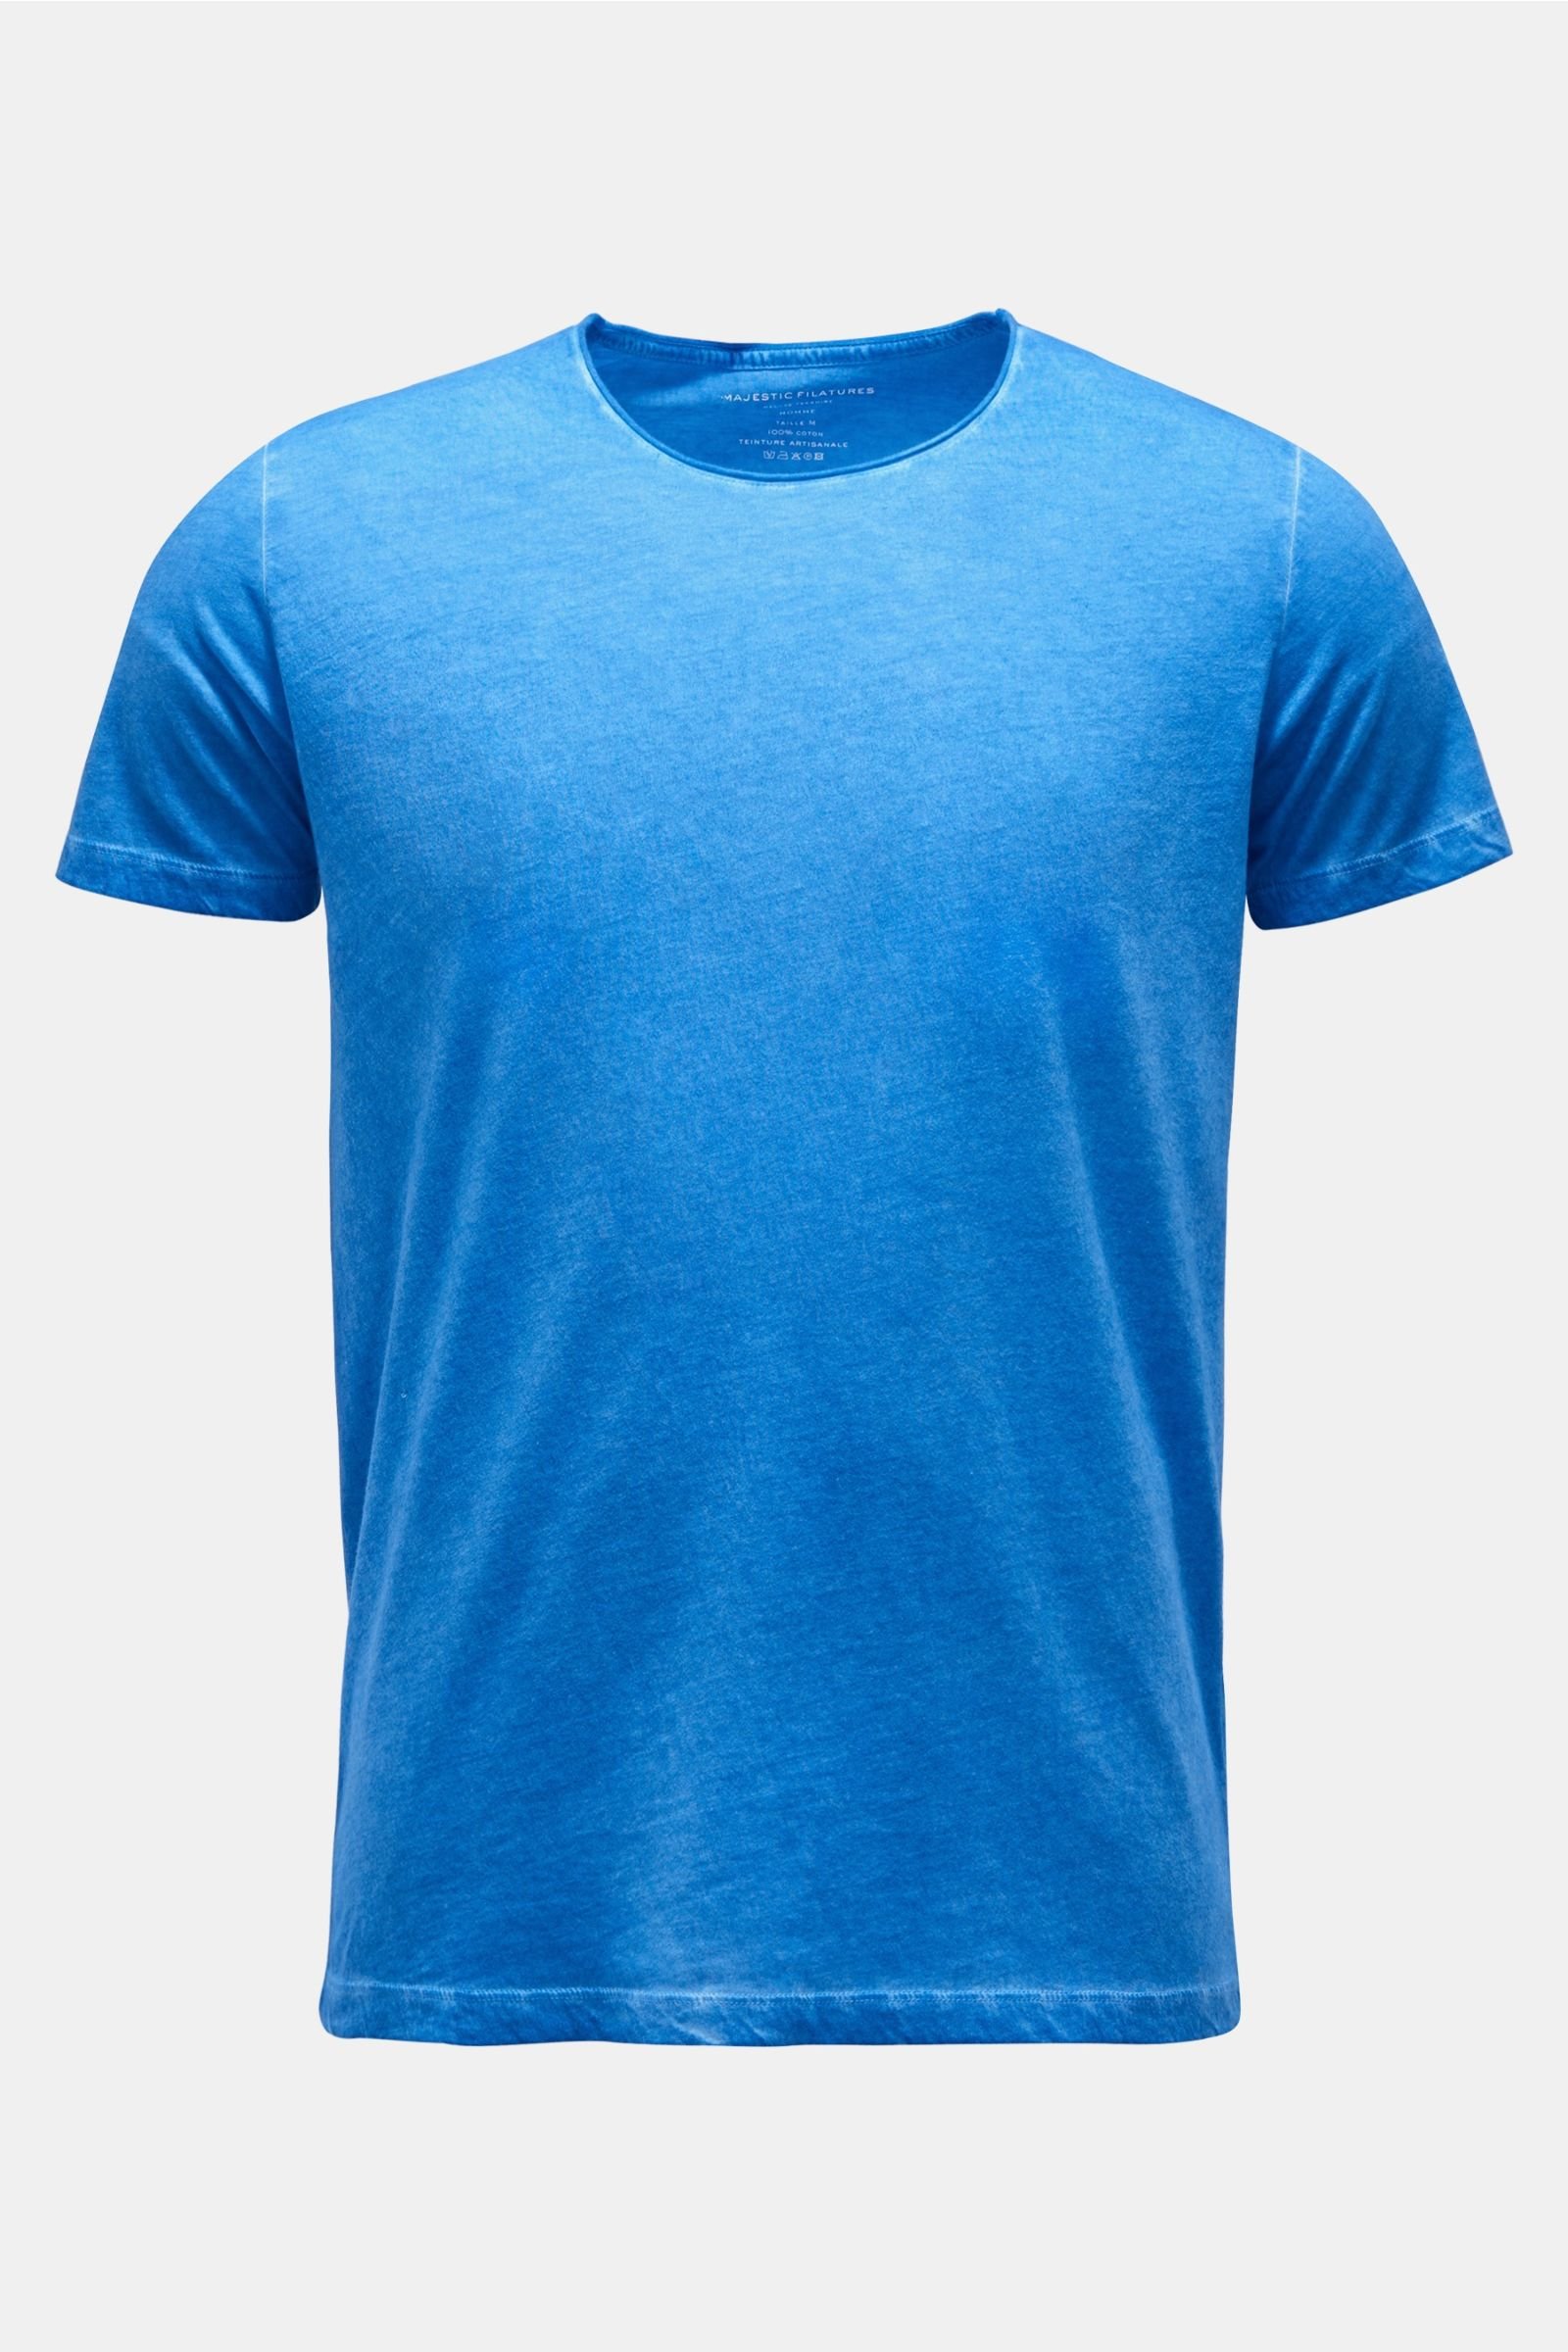 Crew neck T-shirt blue